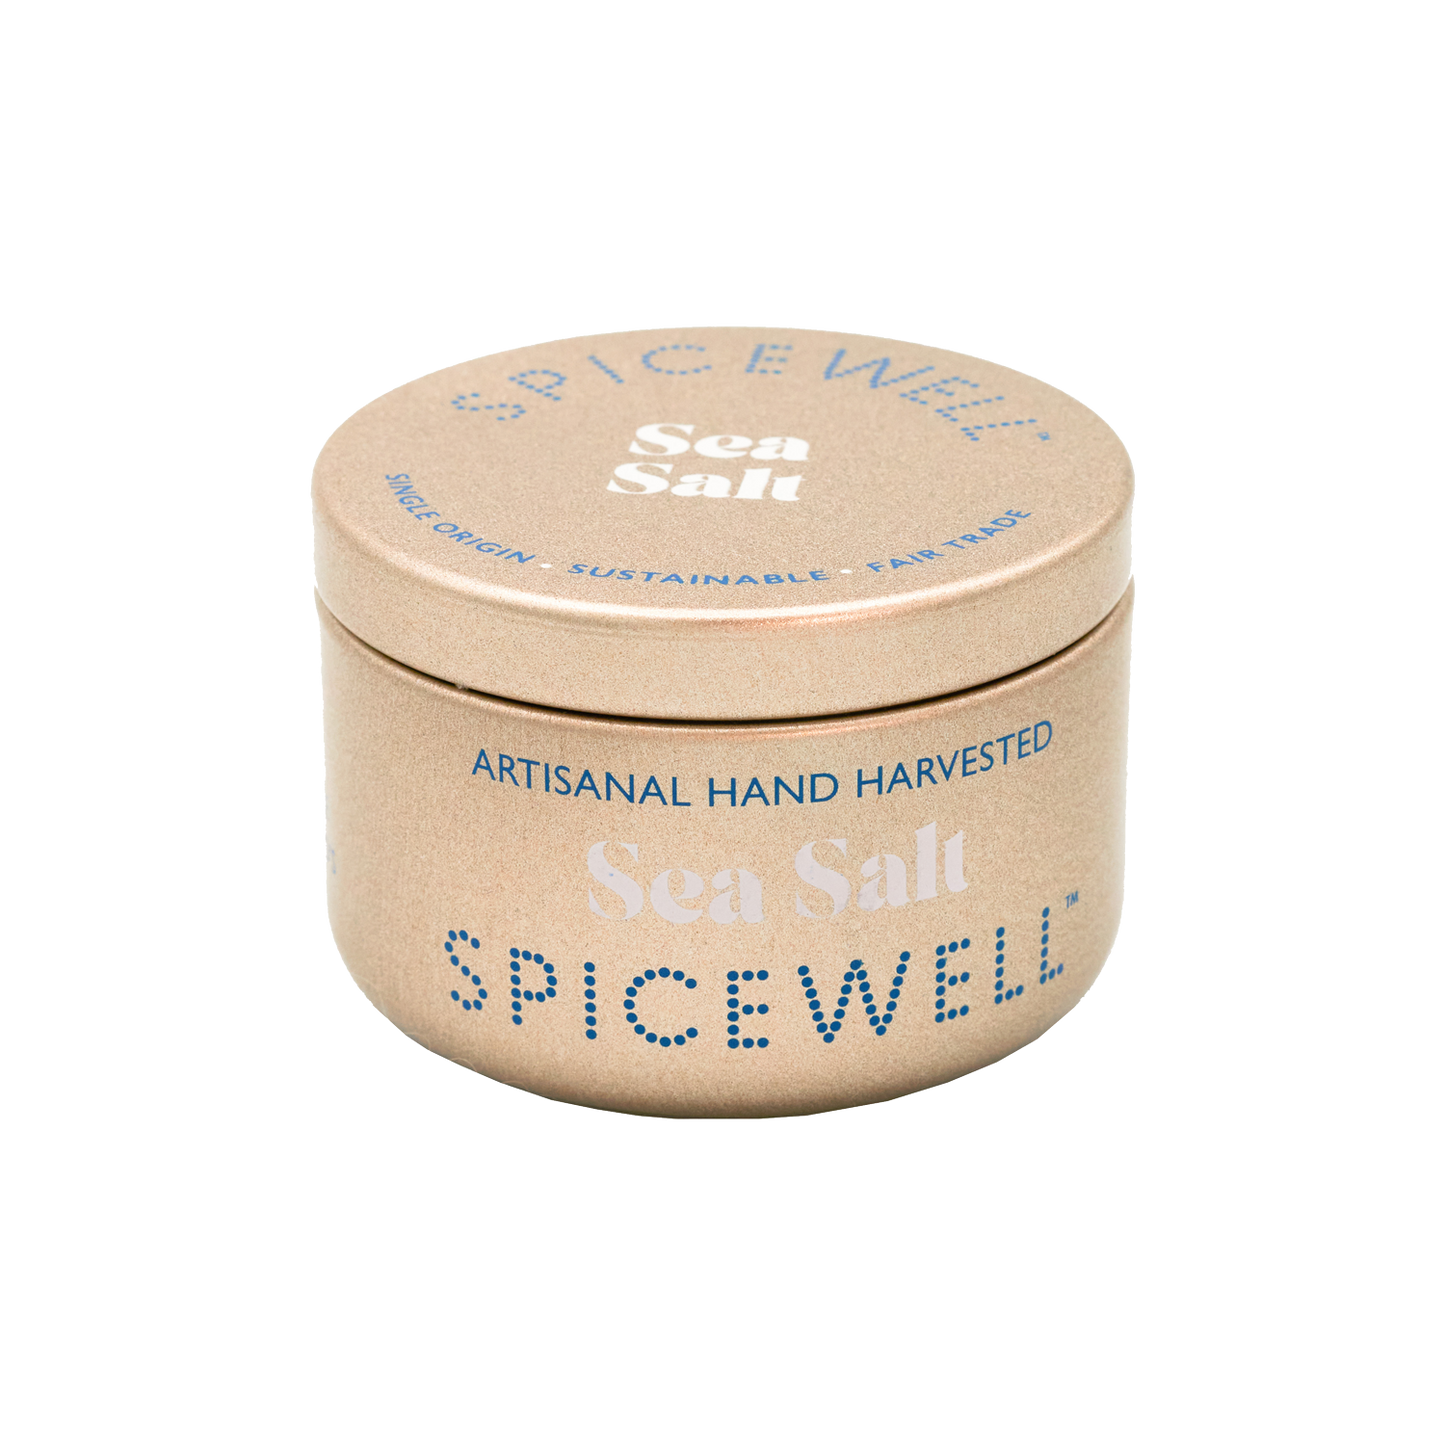 Sustainable Pocket Sea Salt by Spicewell